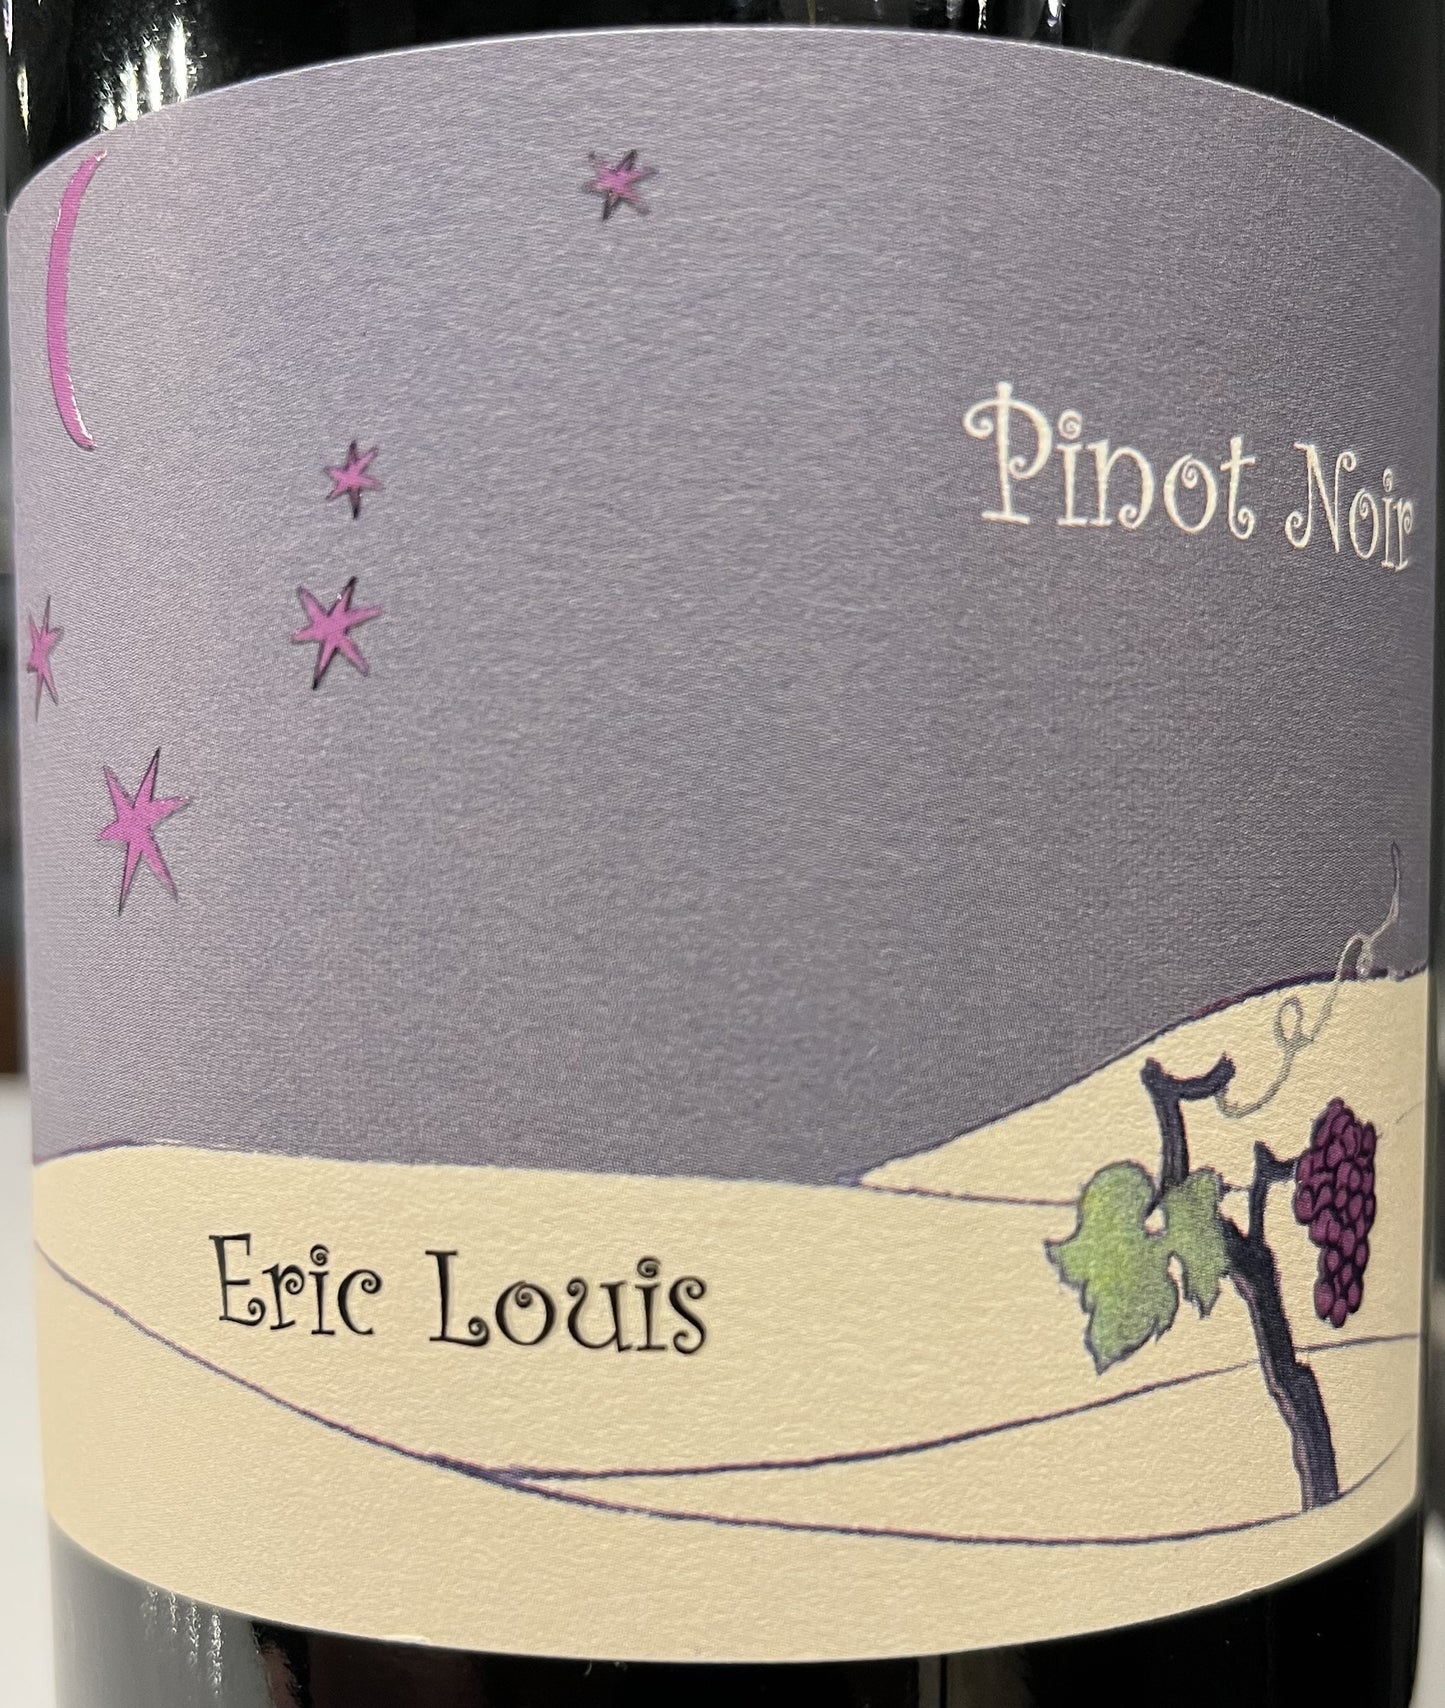 Eric Louis - Pinot Noir